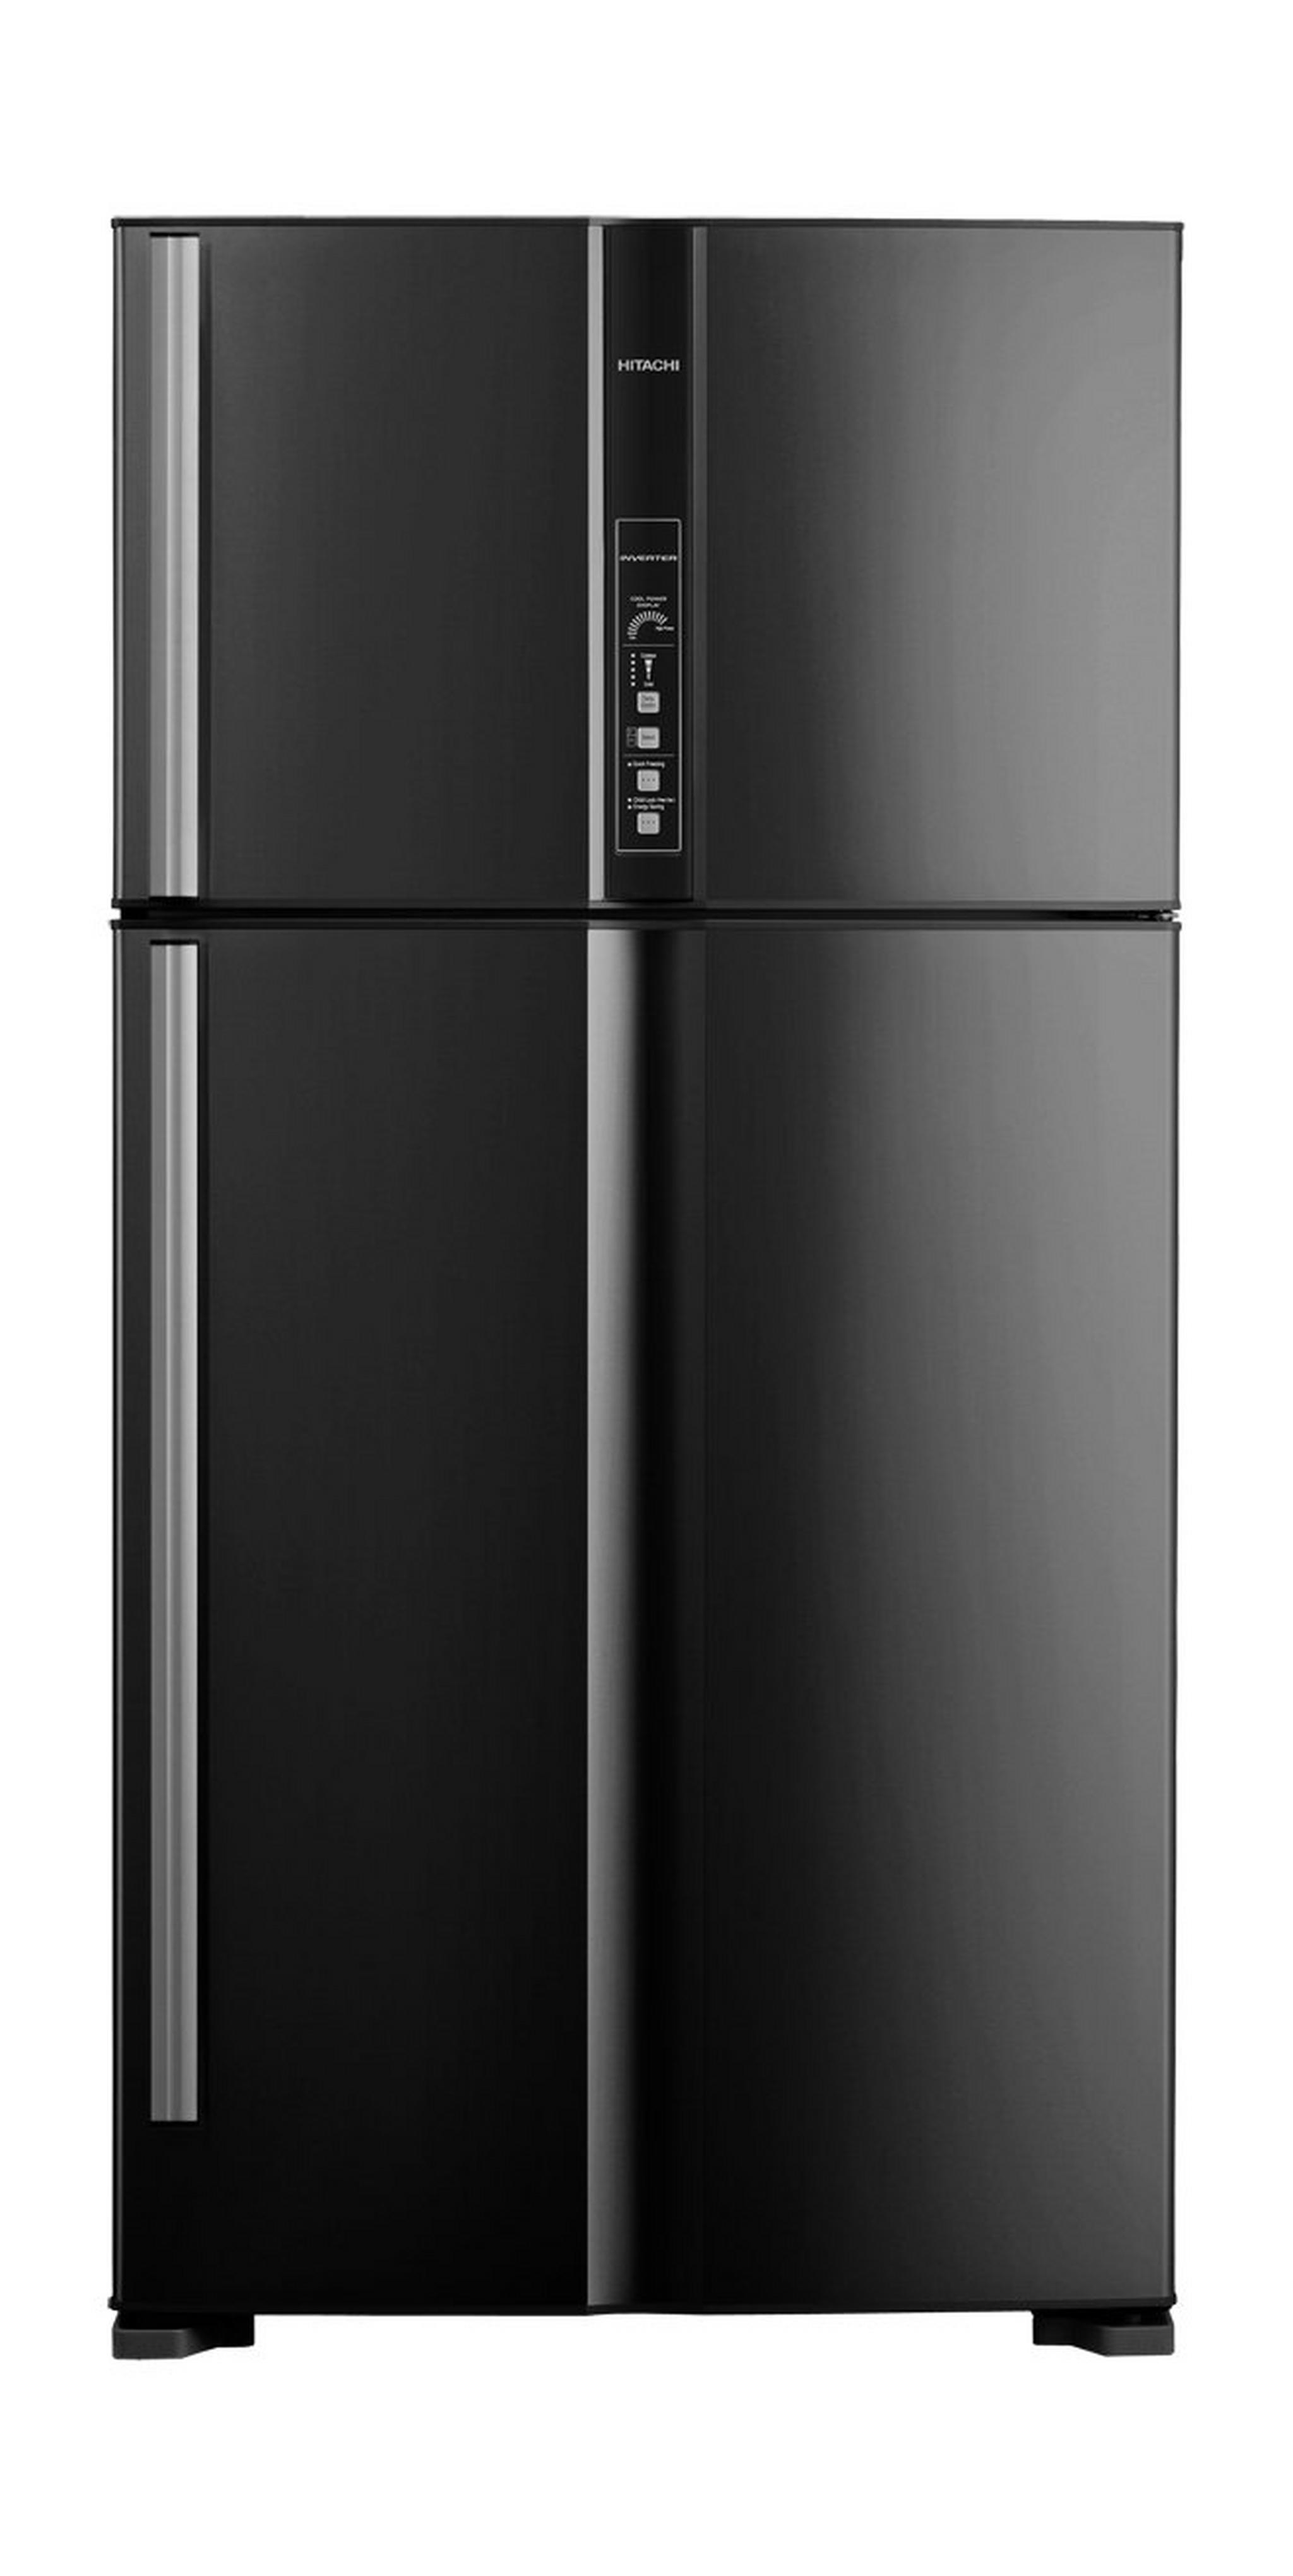 Hitachi 21.2 CFT Top Mount Refrigerator (R-V805PS1KV) - Black